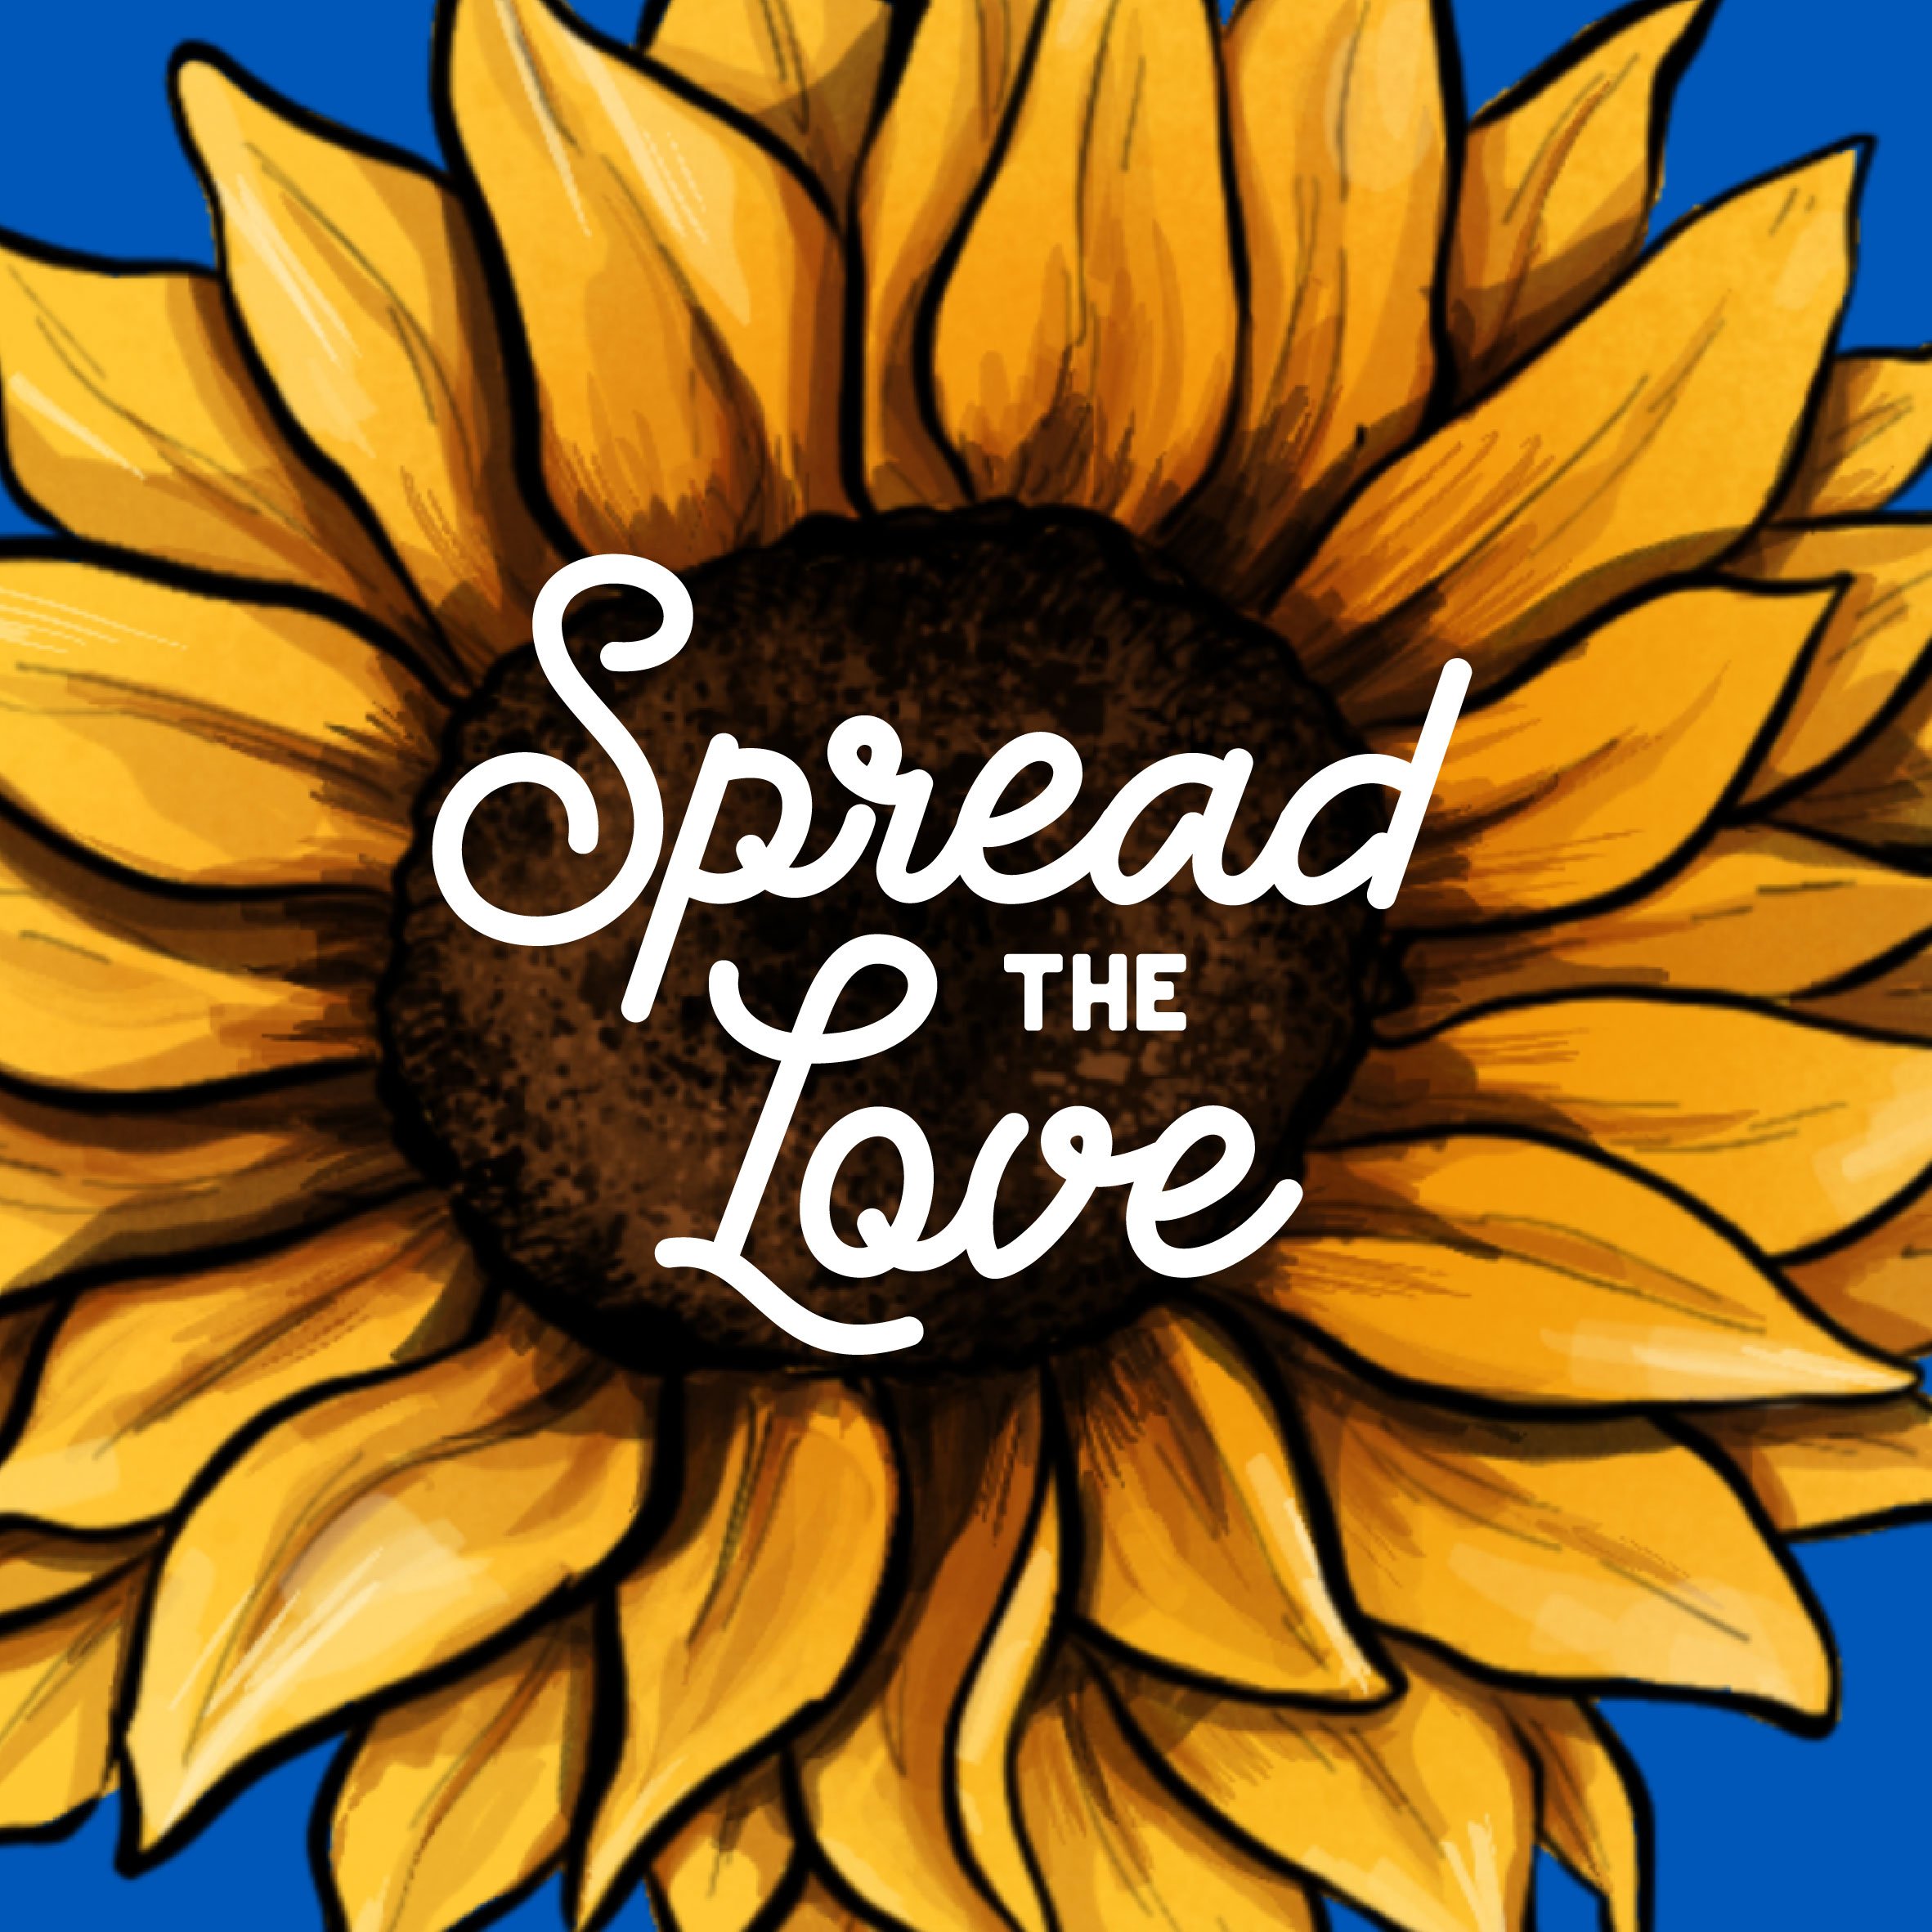 Spread-the-love-sunflower.jpg